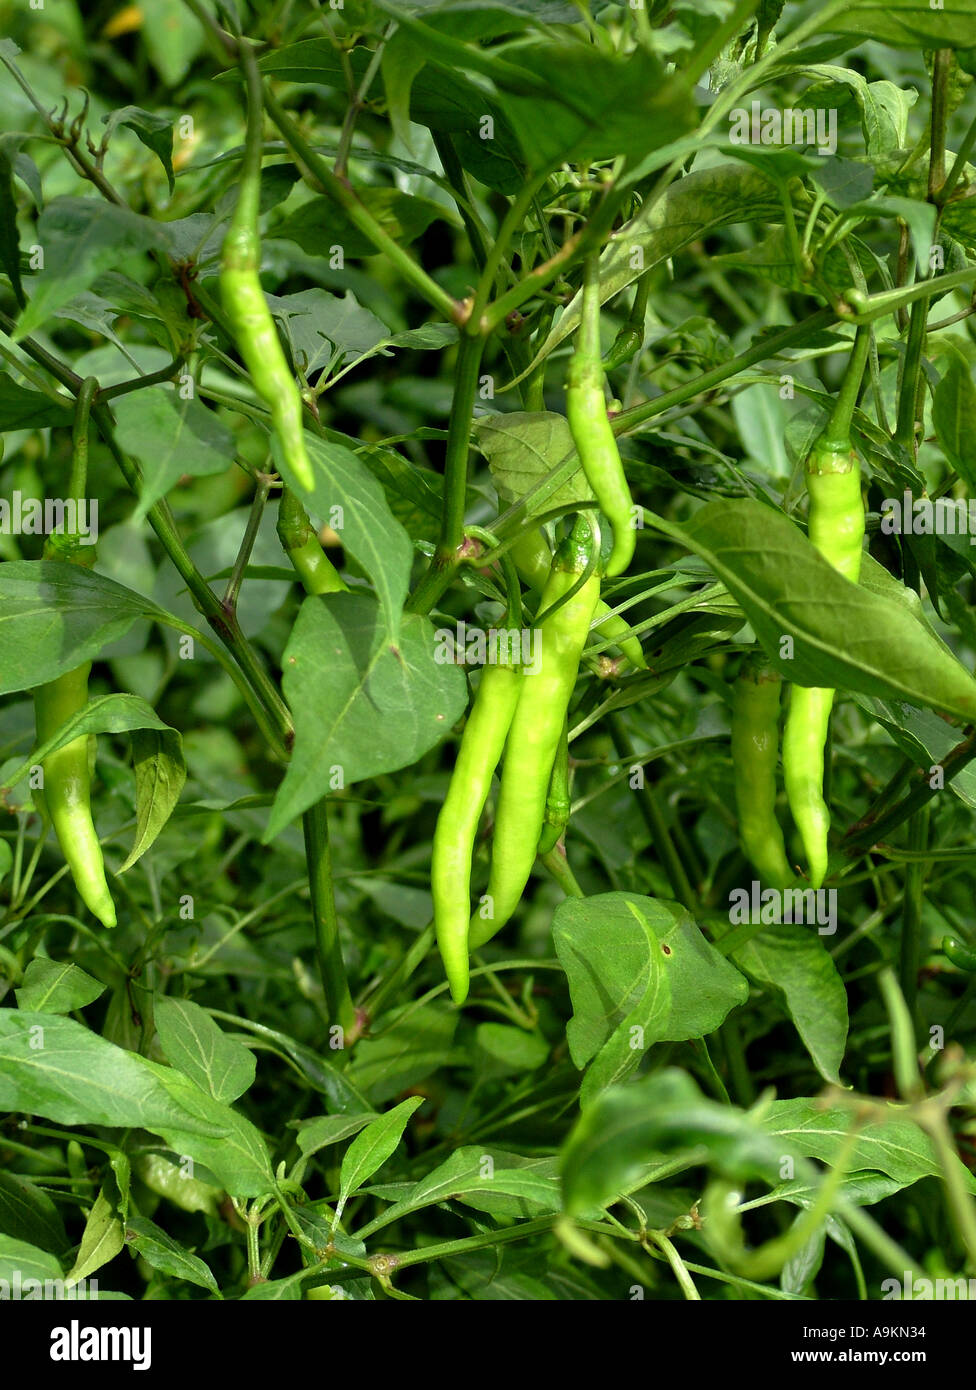 Pianta del peperoncino verde Foto stock - Alamy